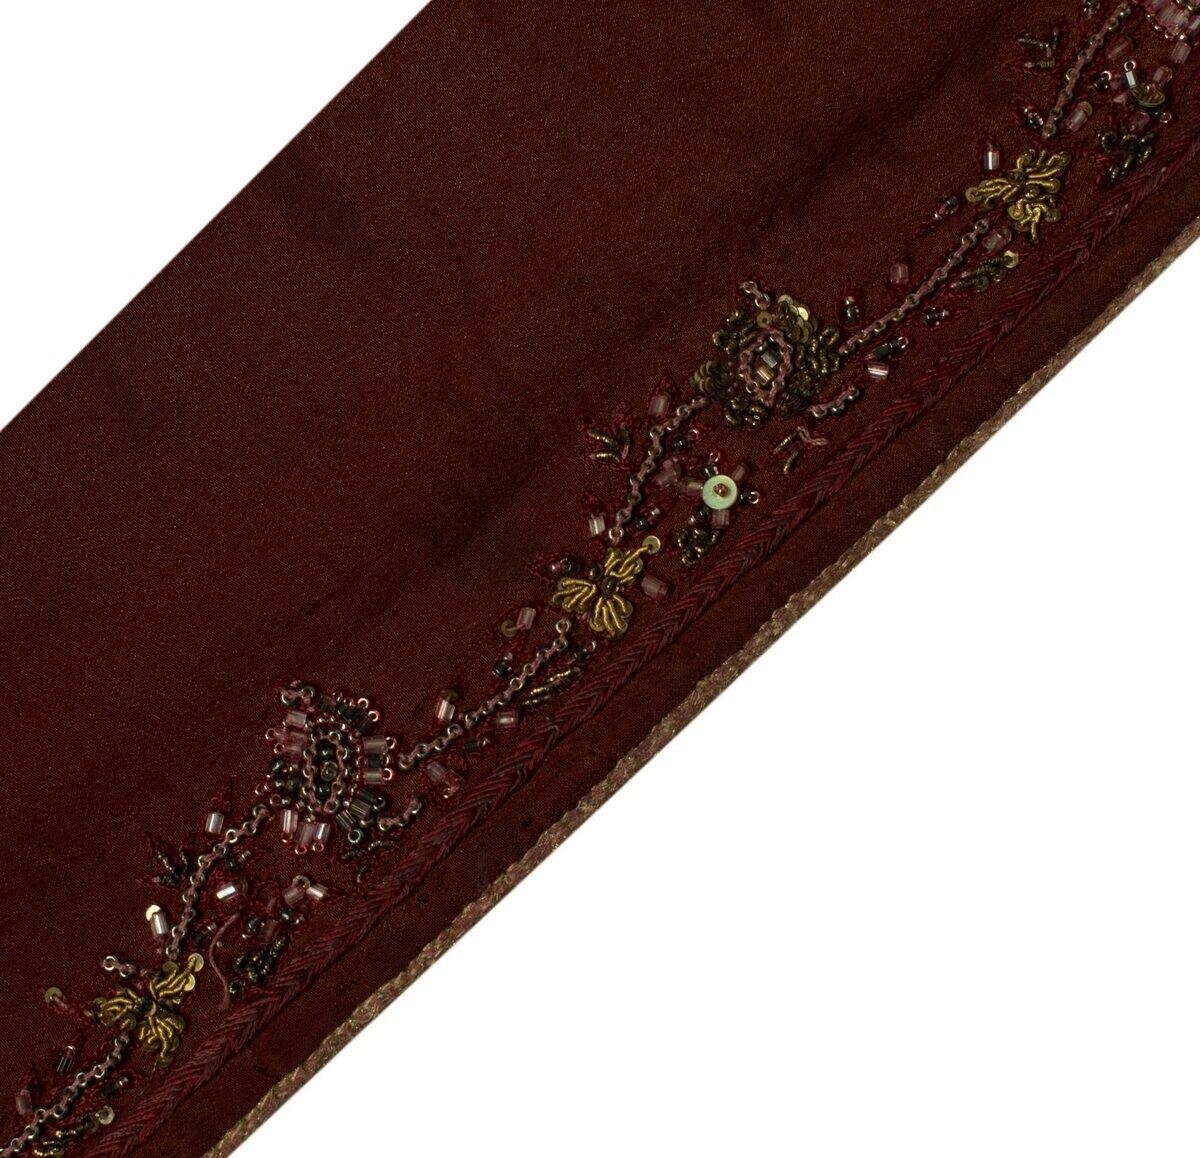 Vintage Sari Border Indian Craft Sewing Trim Hand Beaded Edging Ribbon Lace